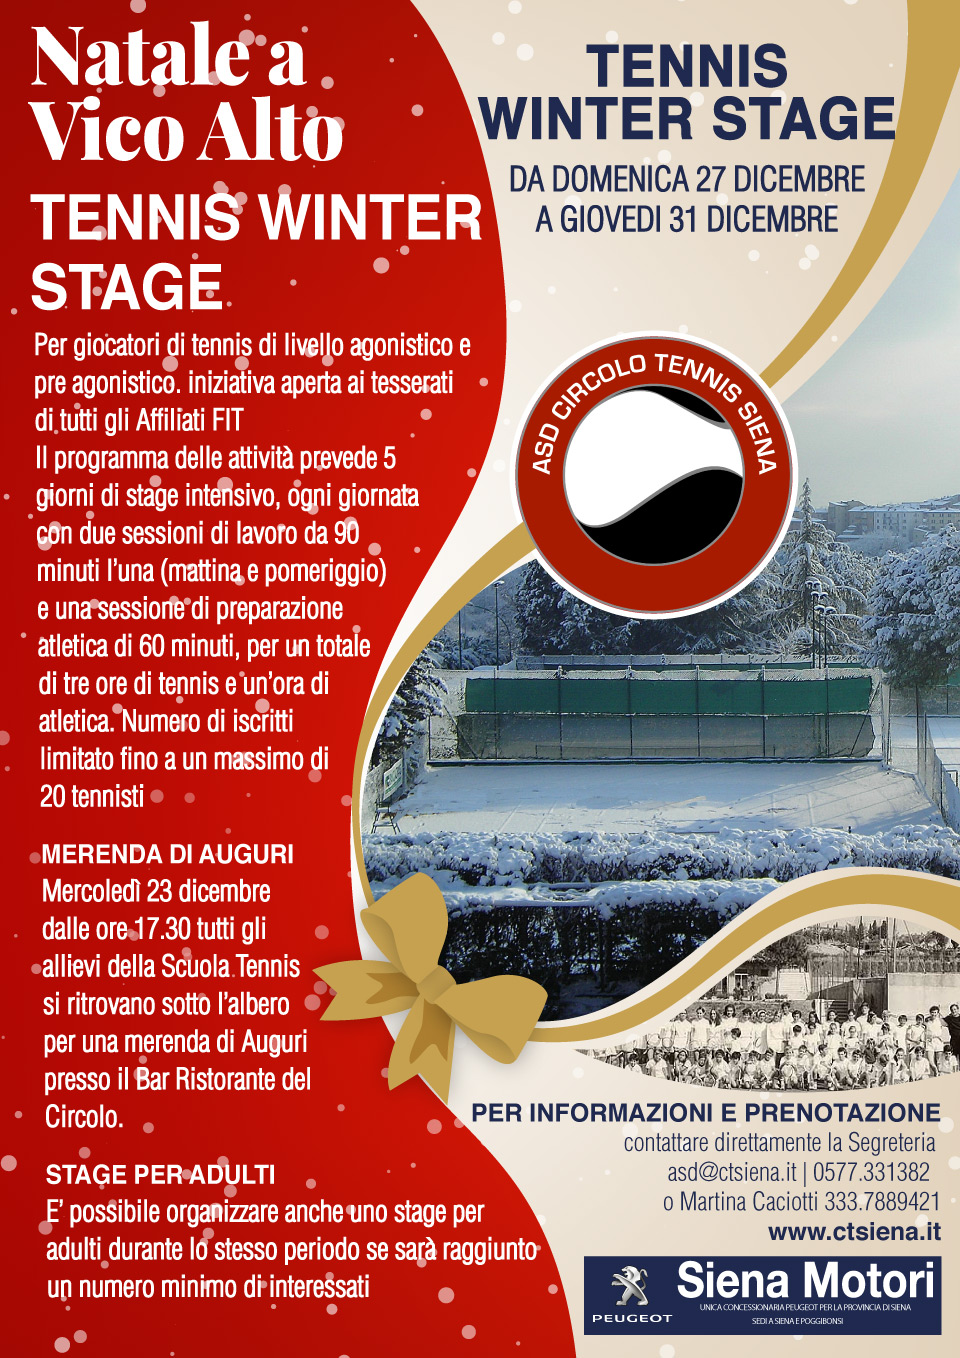 Tennis: Winter stage a Vico Alto